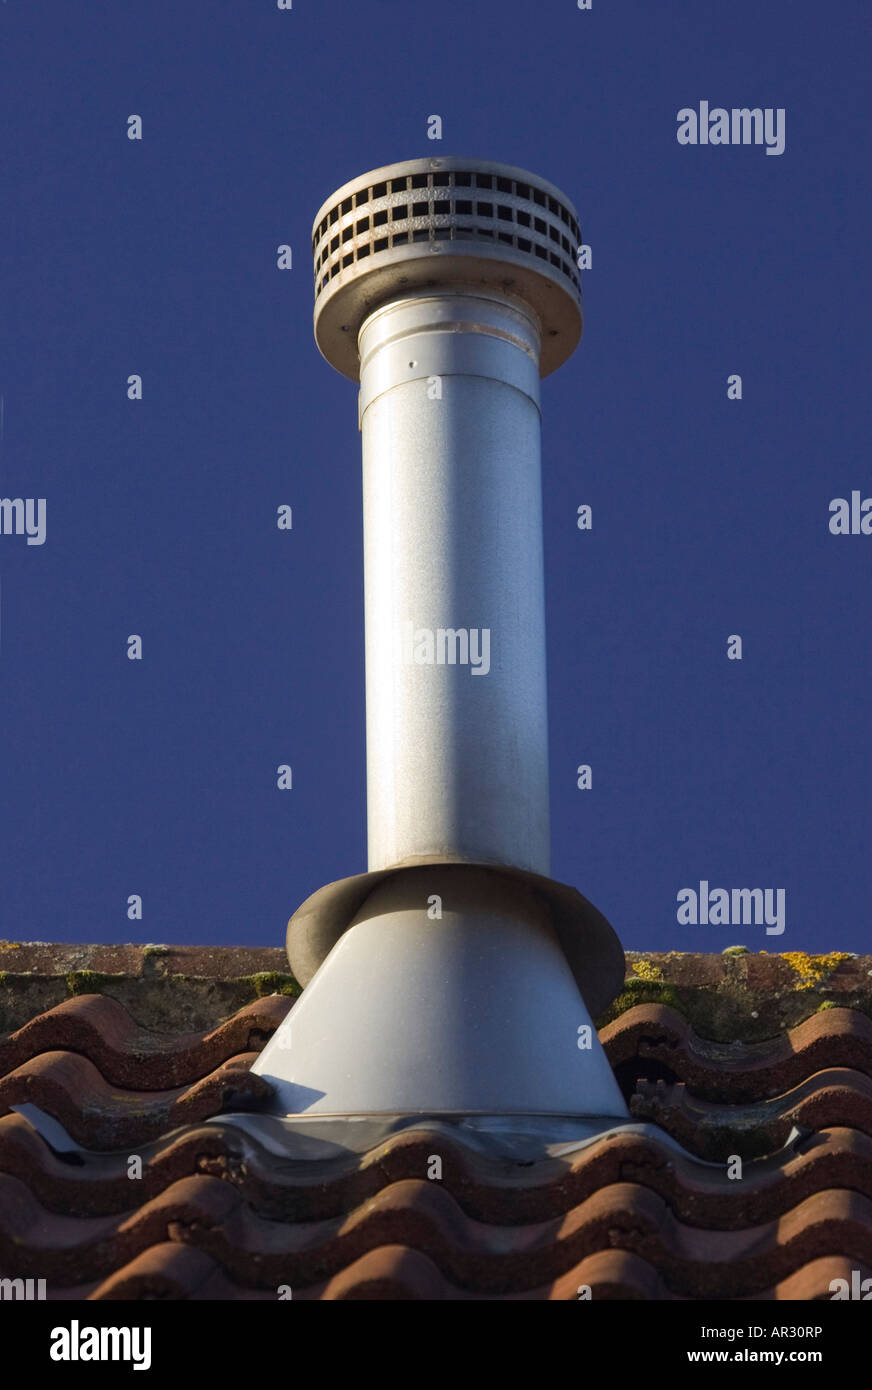 Canna fumaria per una stufa a gas Foto stock - Alamy